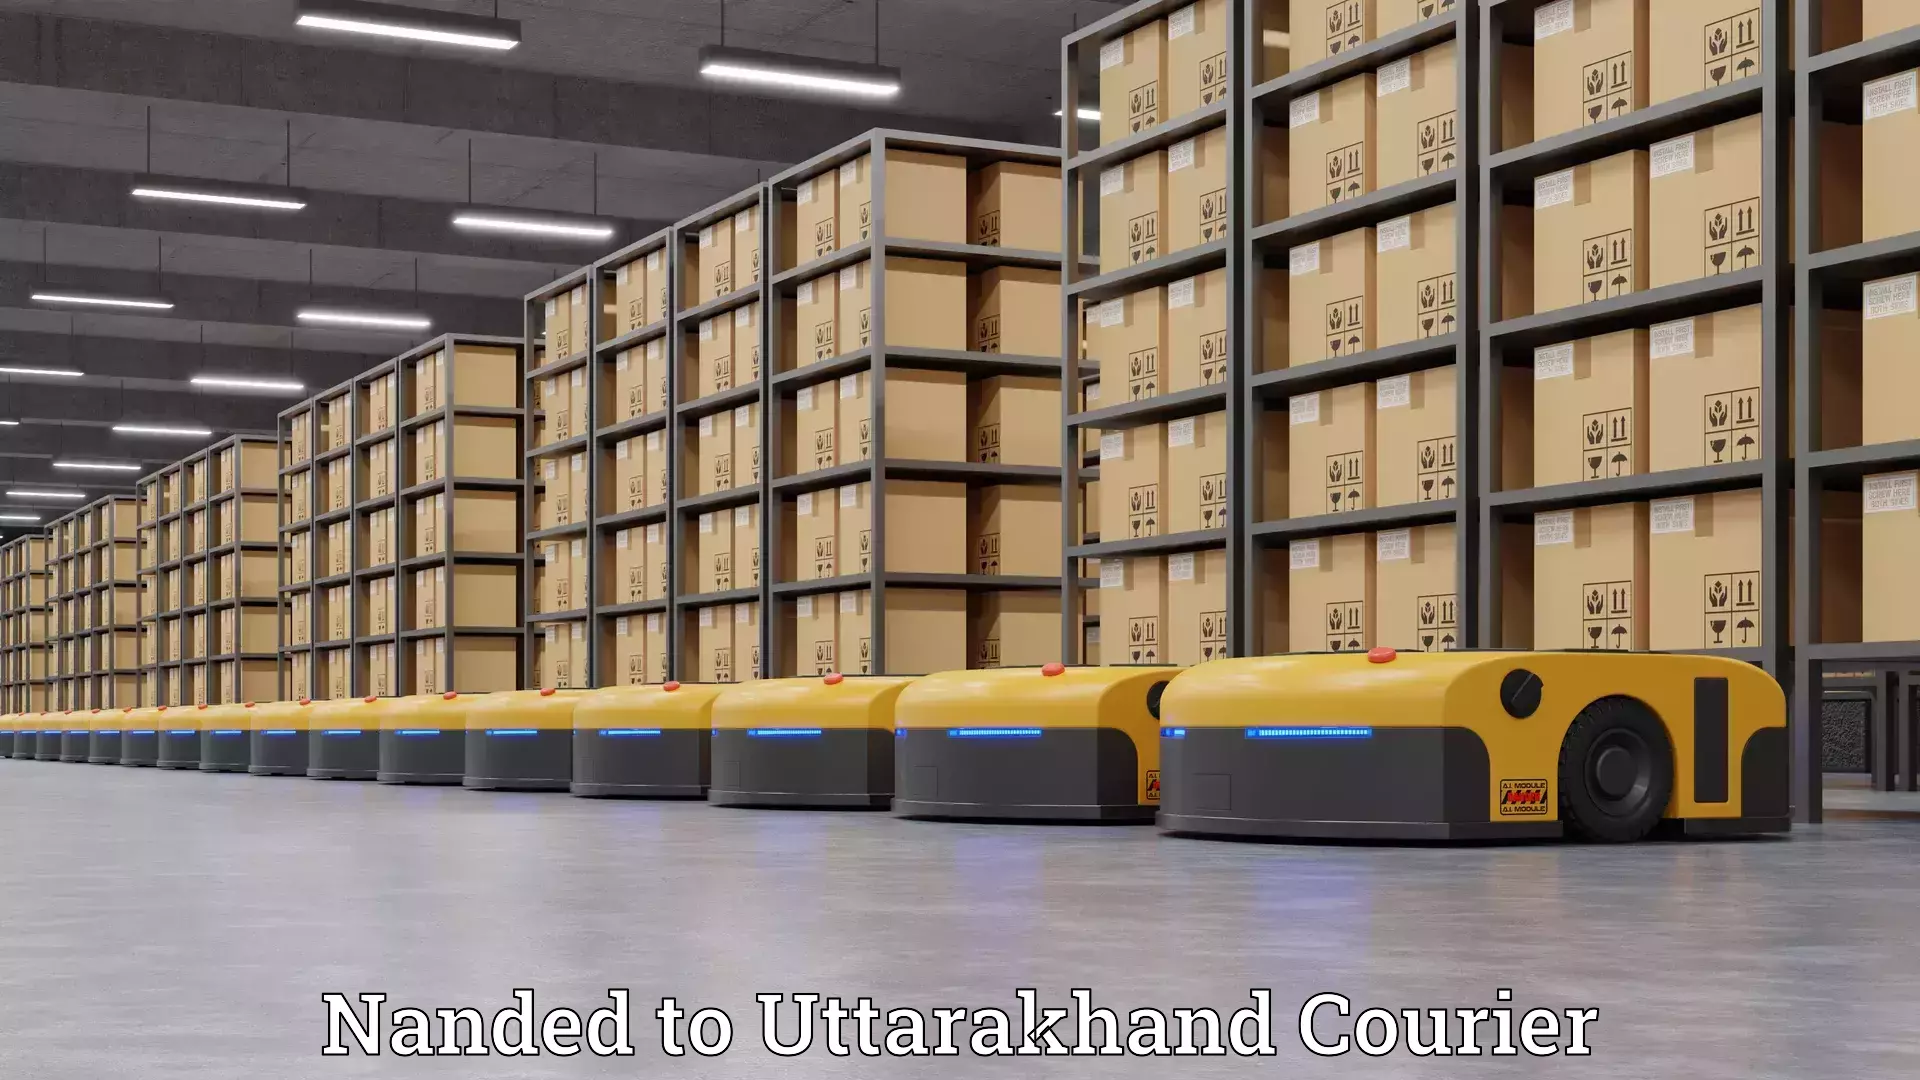 Professional moving company Nanded to Uttarakhand